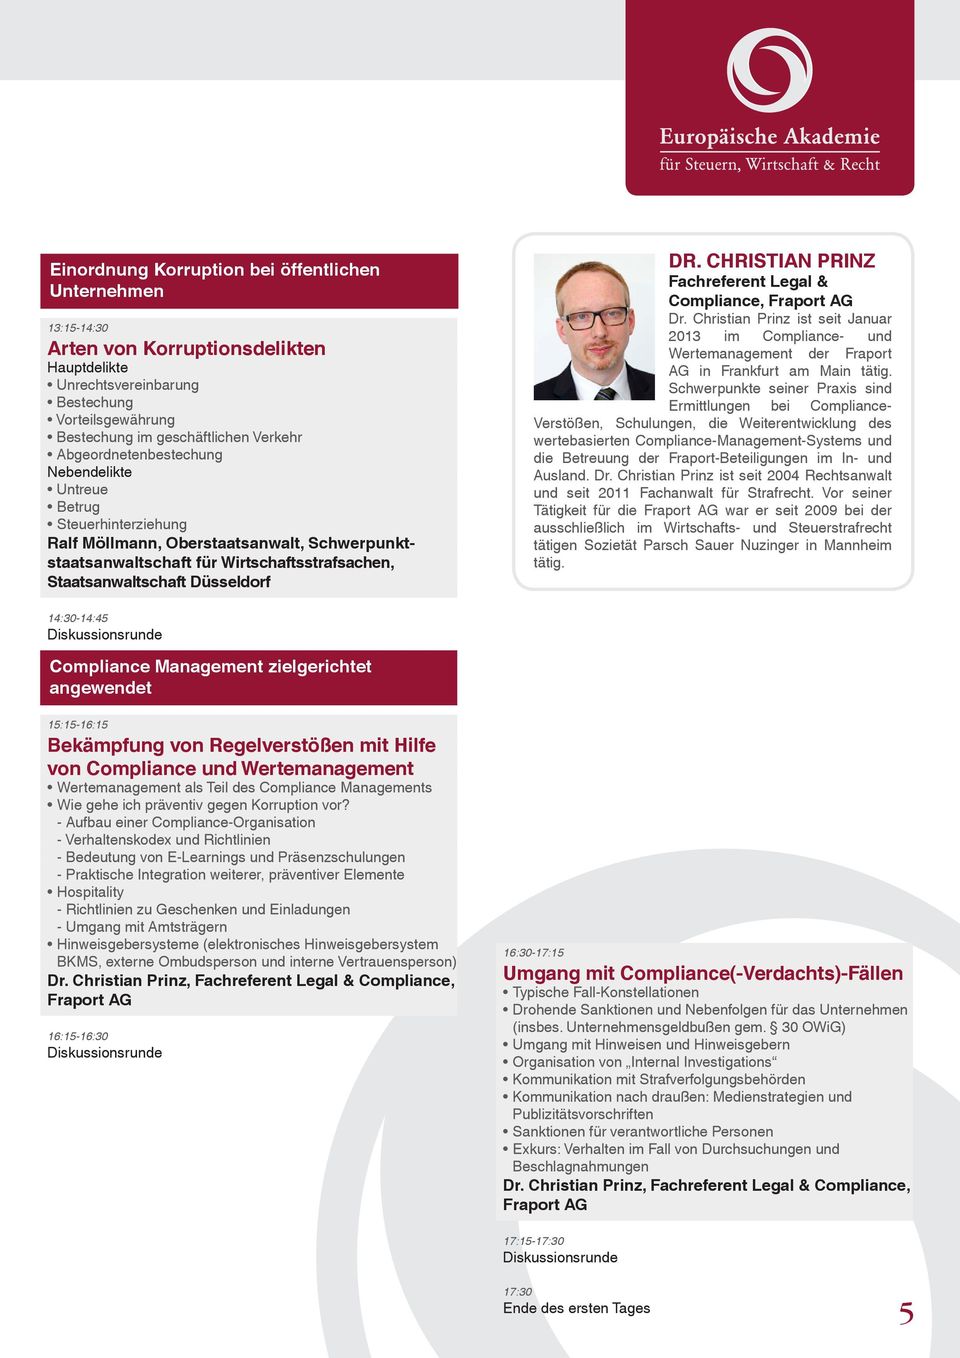 CHRISTIAN PRINZ Fachreferent Legal & Compliance, Fraport AG Dr. Christian Prinz ist seit Januar 2013 im Compliance- und Wertemanagement der Fraport AG in Frankfurt am Main tätig.